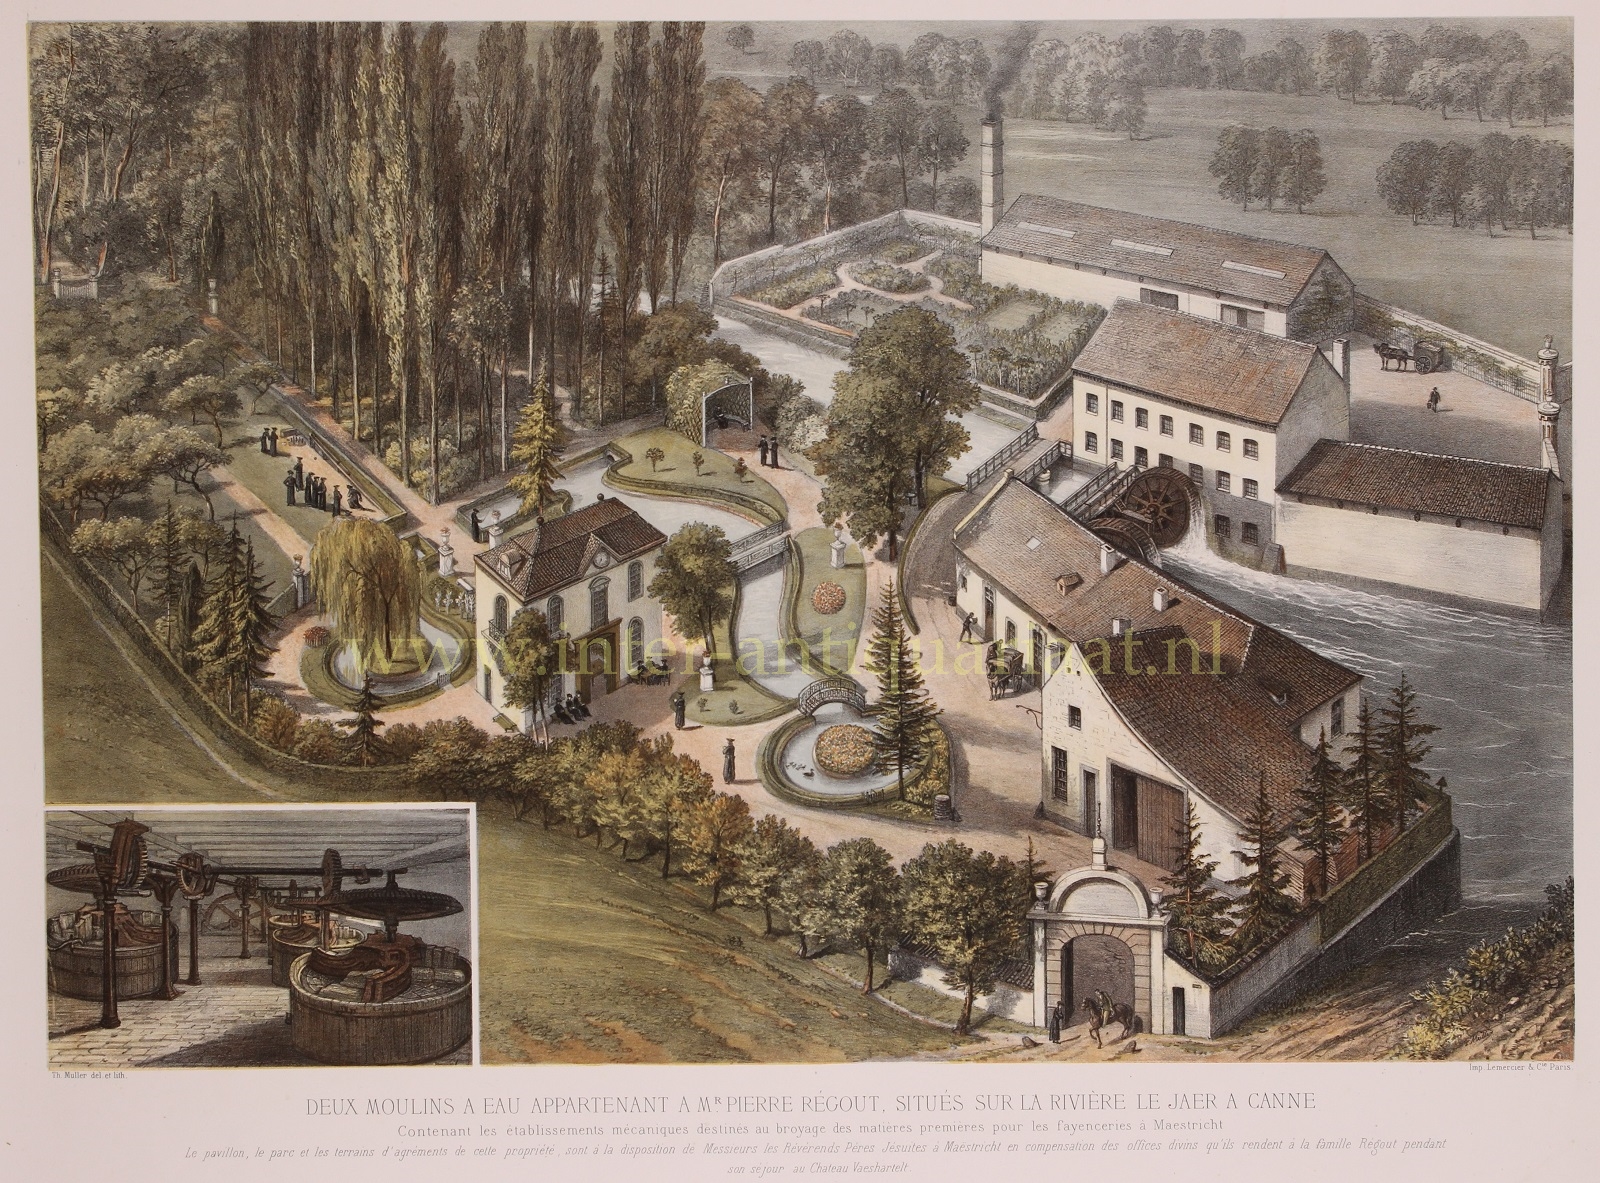  - Villa Canne (Maastricht) - Theodore Mller + Lemercier, 1863